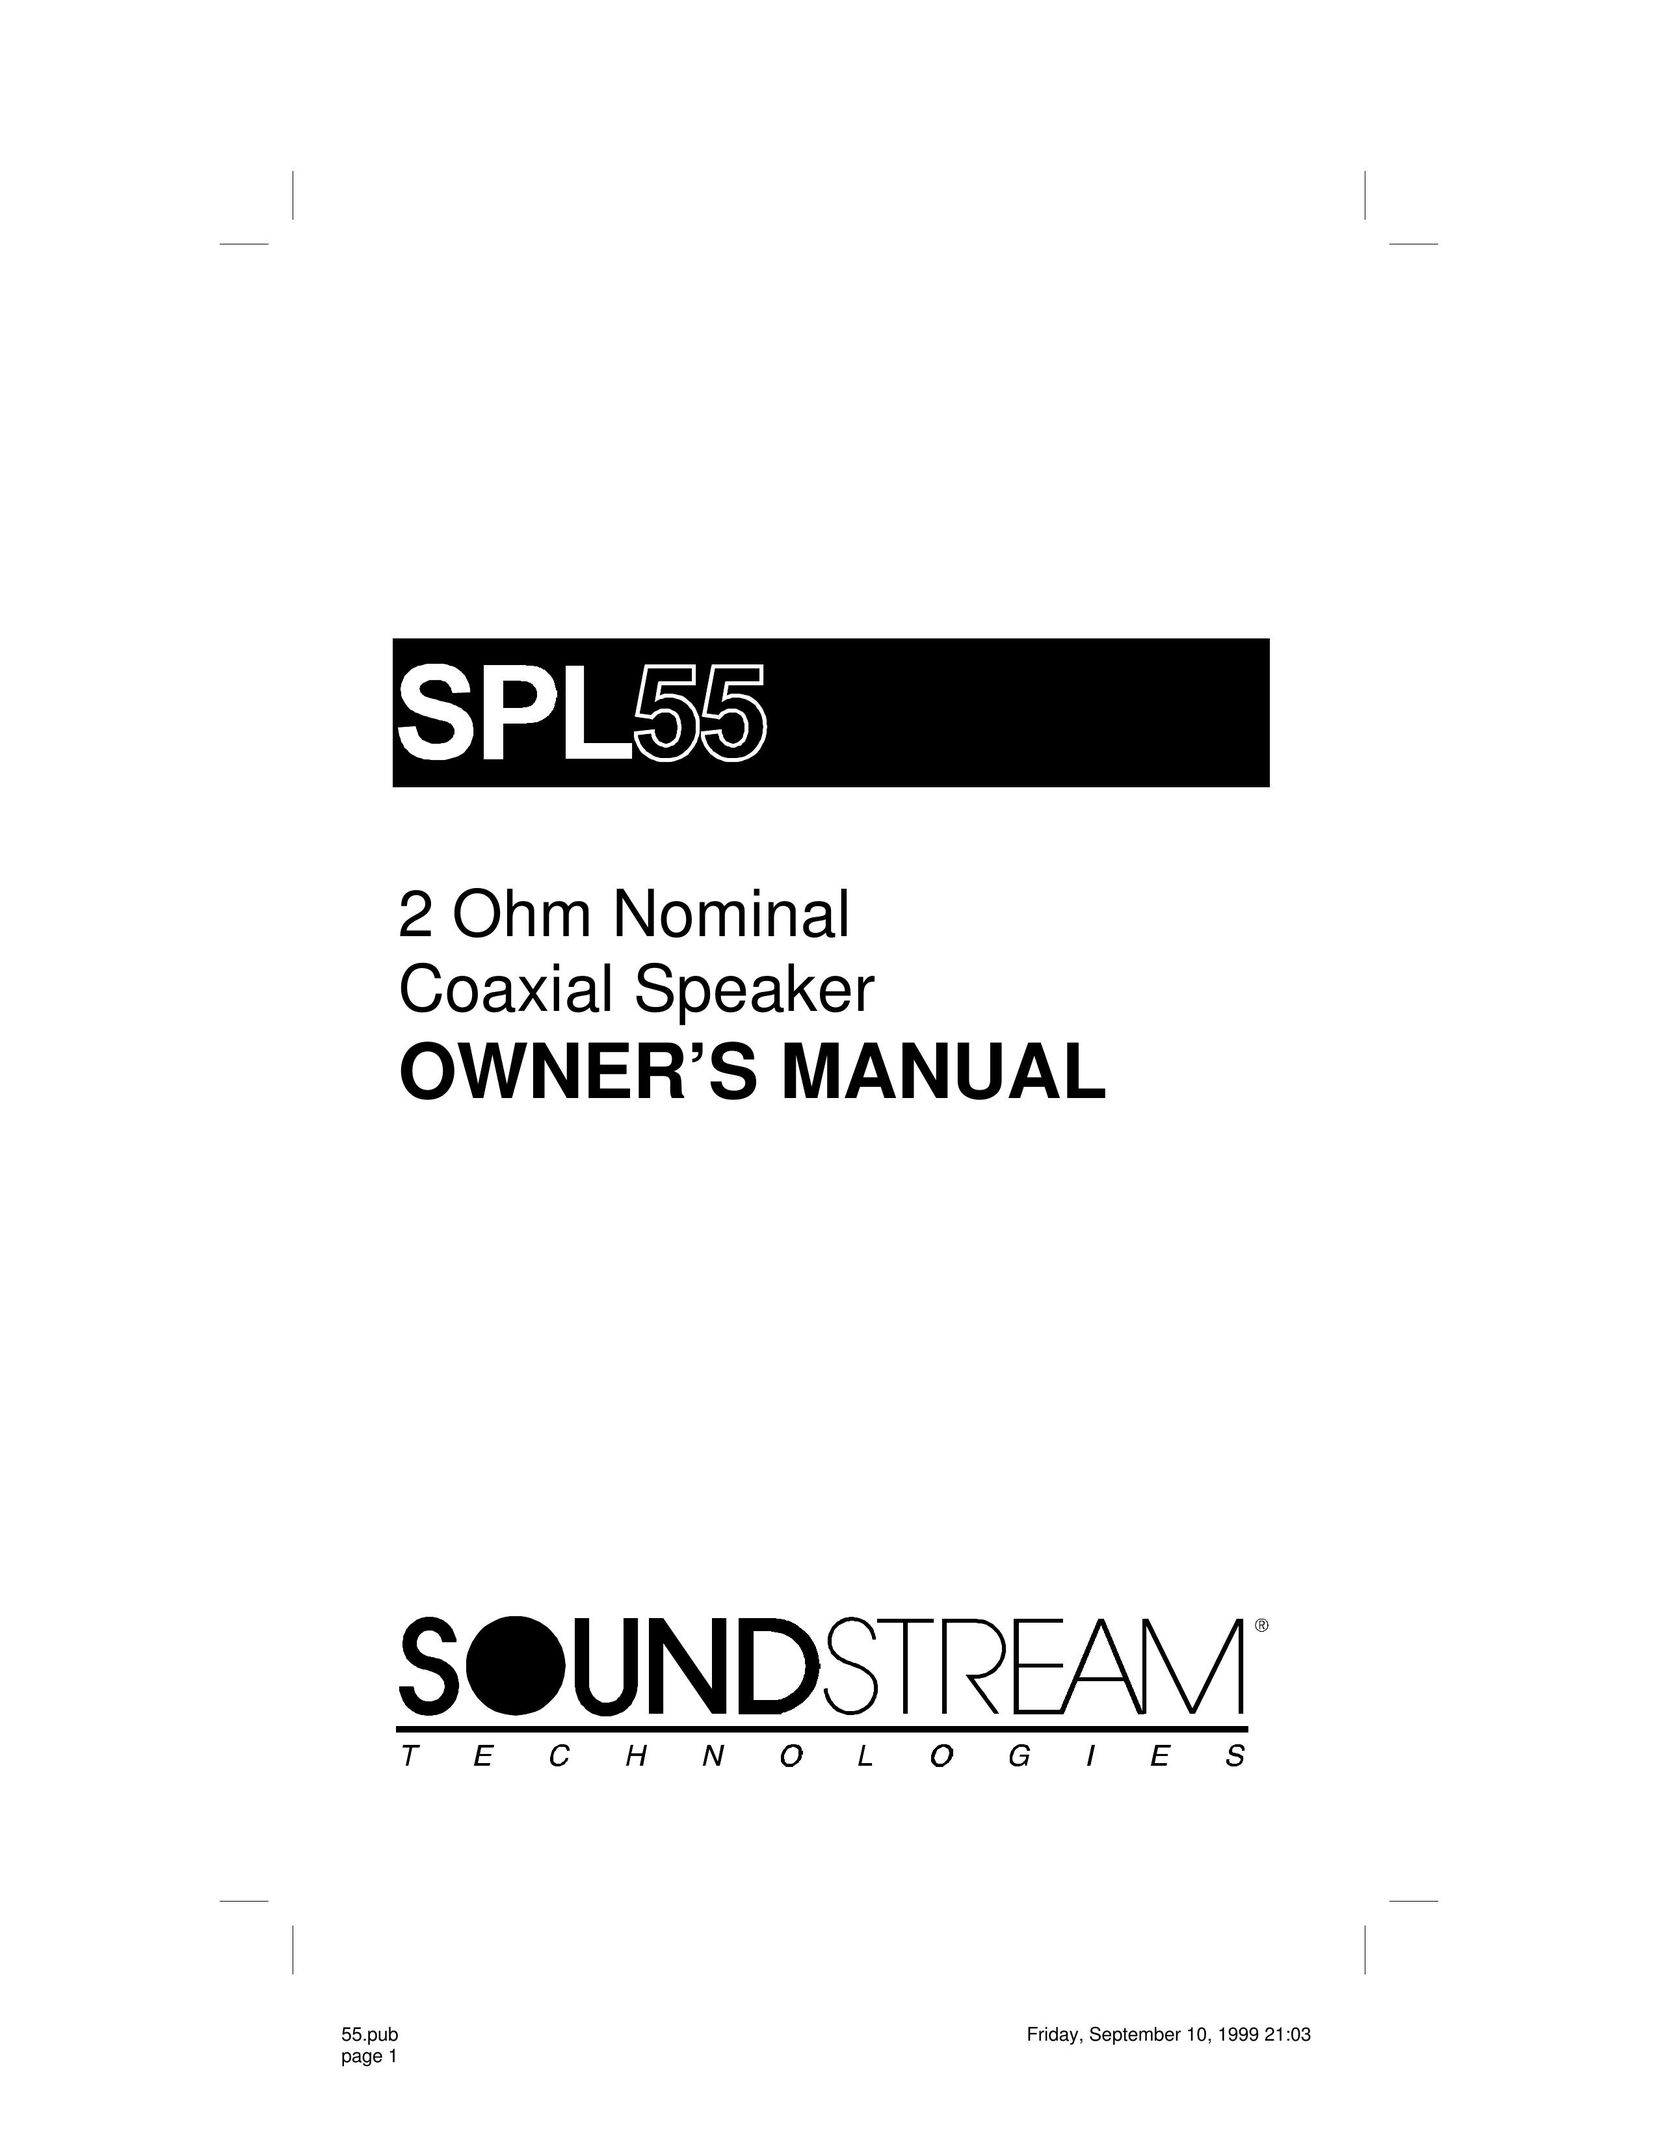 Soundstream Technologies SPL 55 Car Speaker User Manual